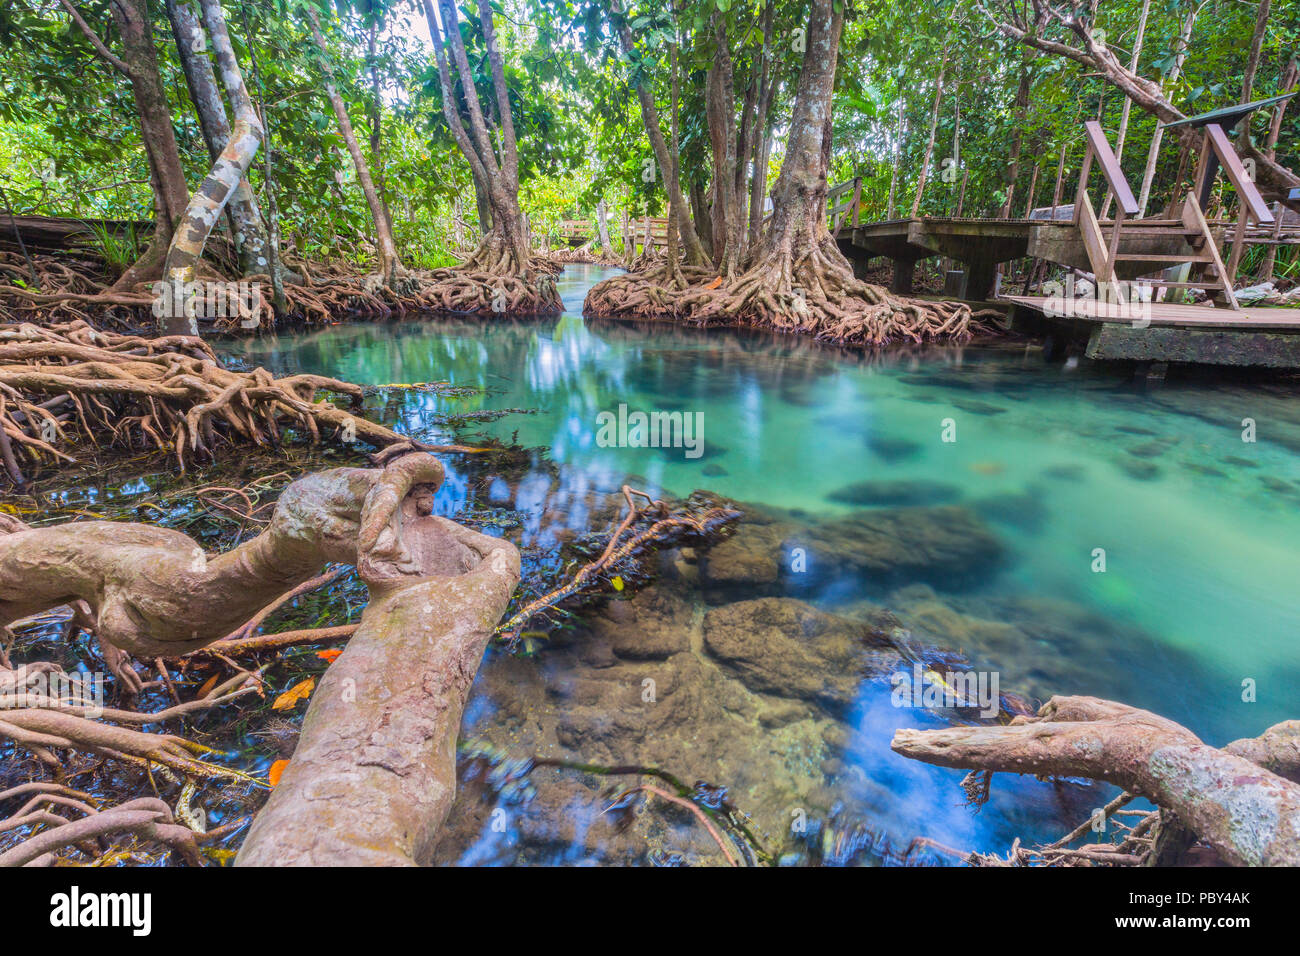 Wooden bridge to the jungle, Tha pom mangrove forest, Krabi,Thailand Stock Photo